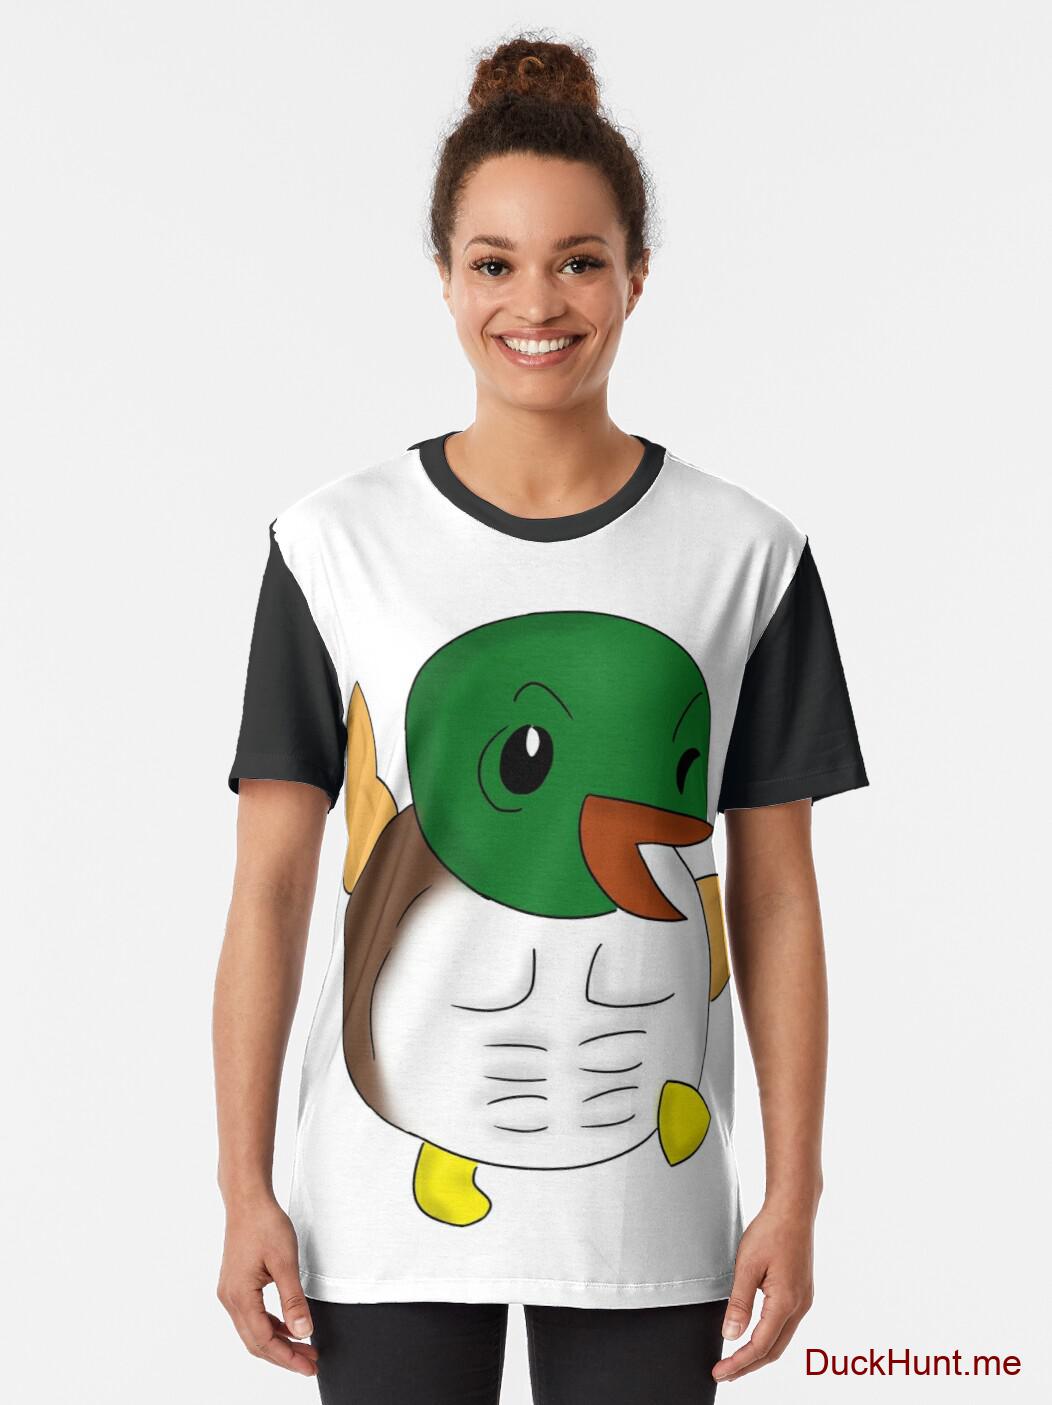 Super duck Black Graphic T-Shirt alternative image 1